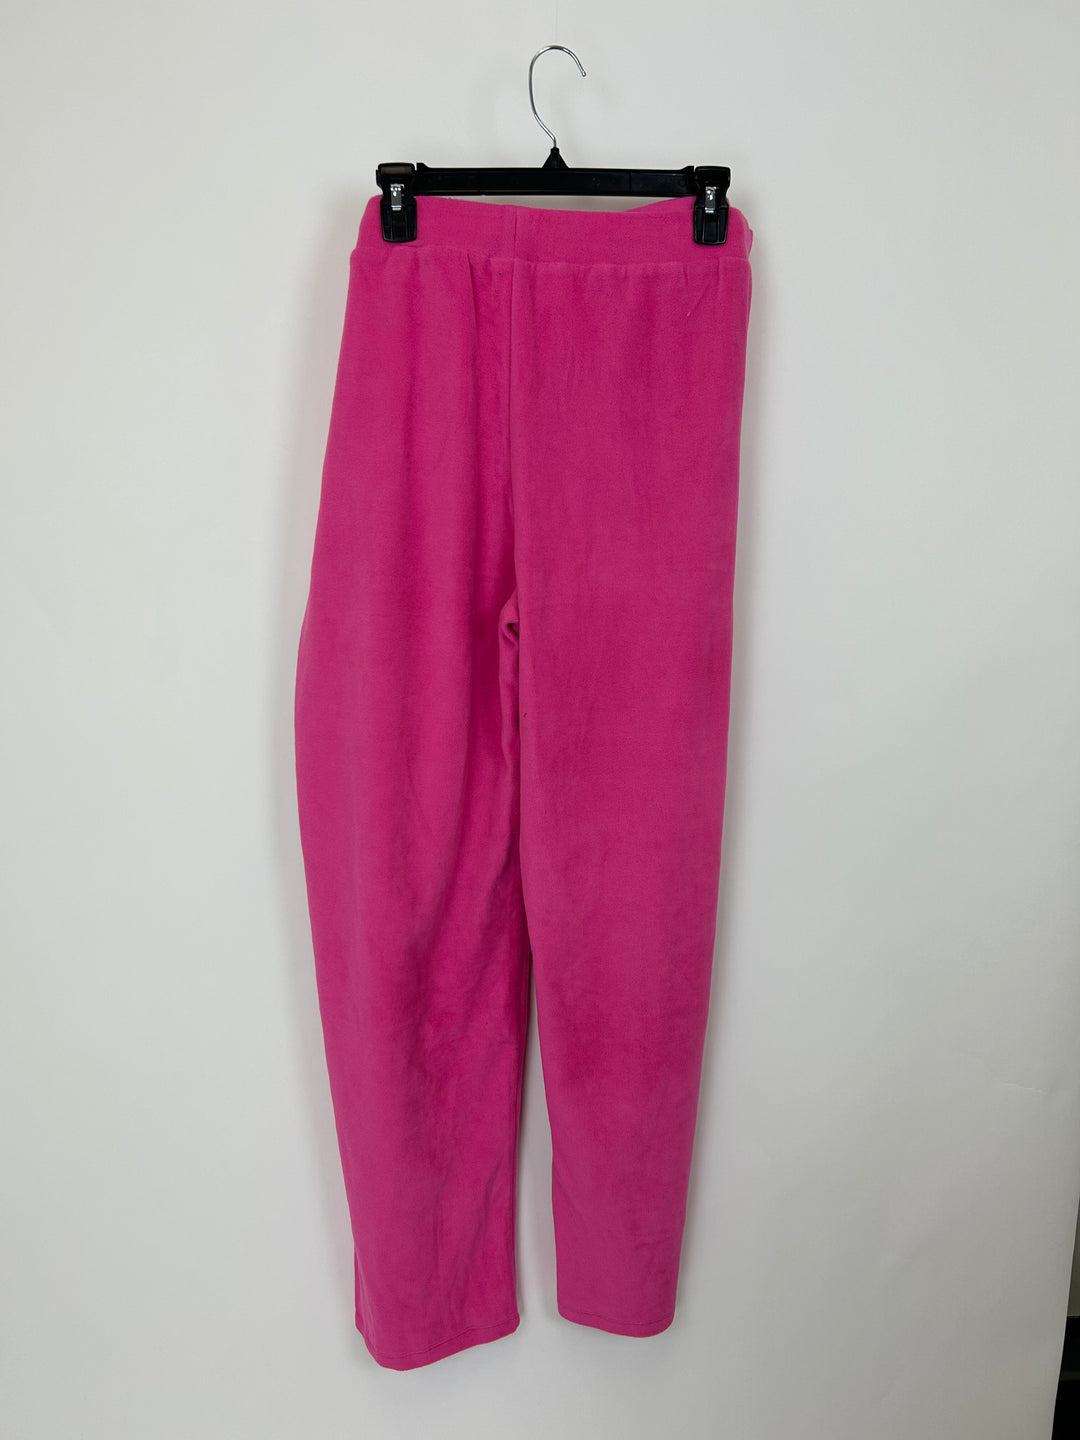 Bubblegum Pink Lounge Pants - 1X